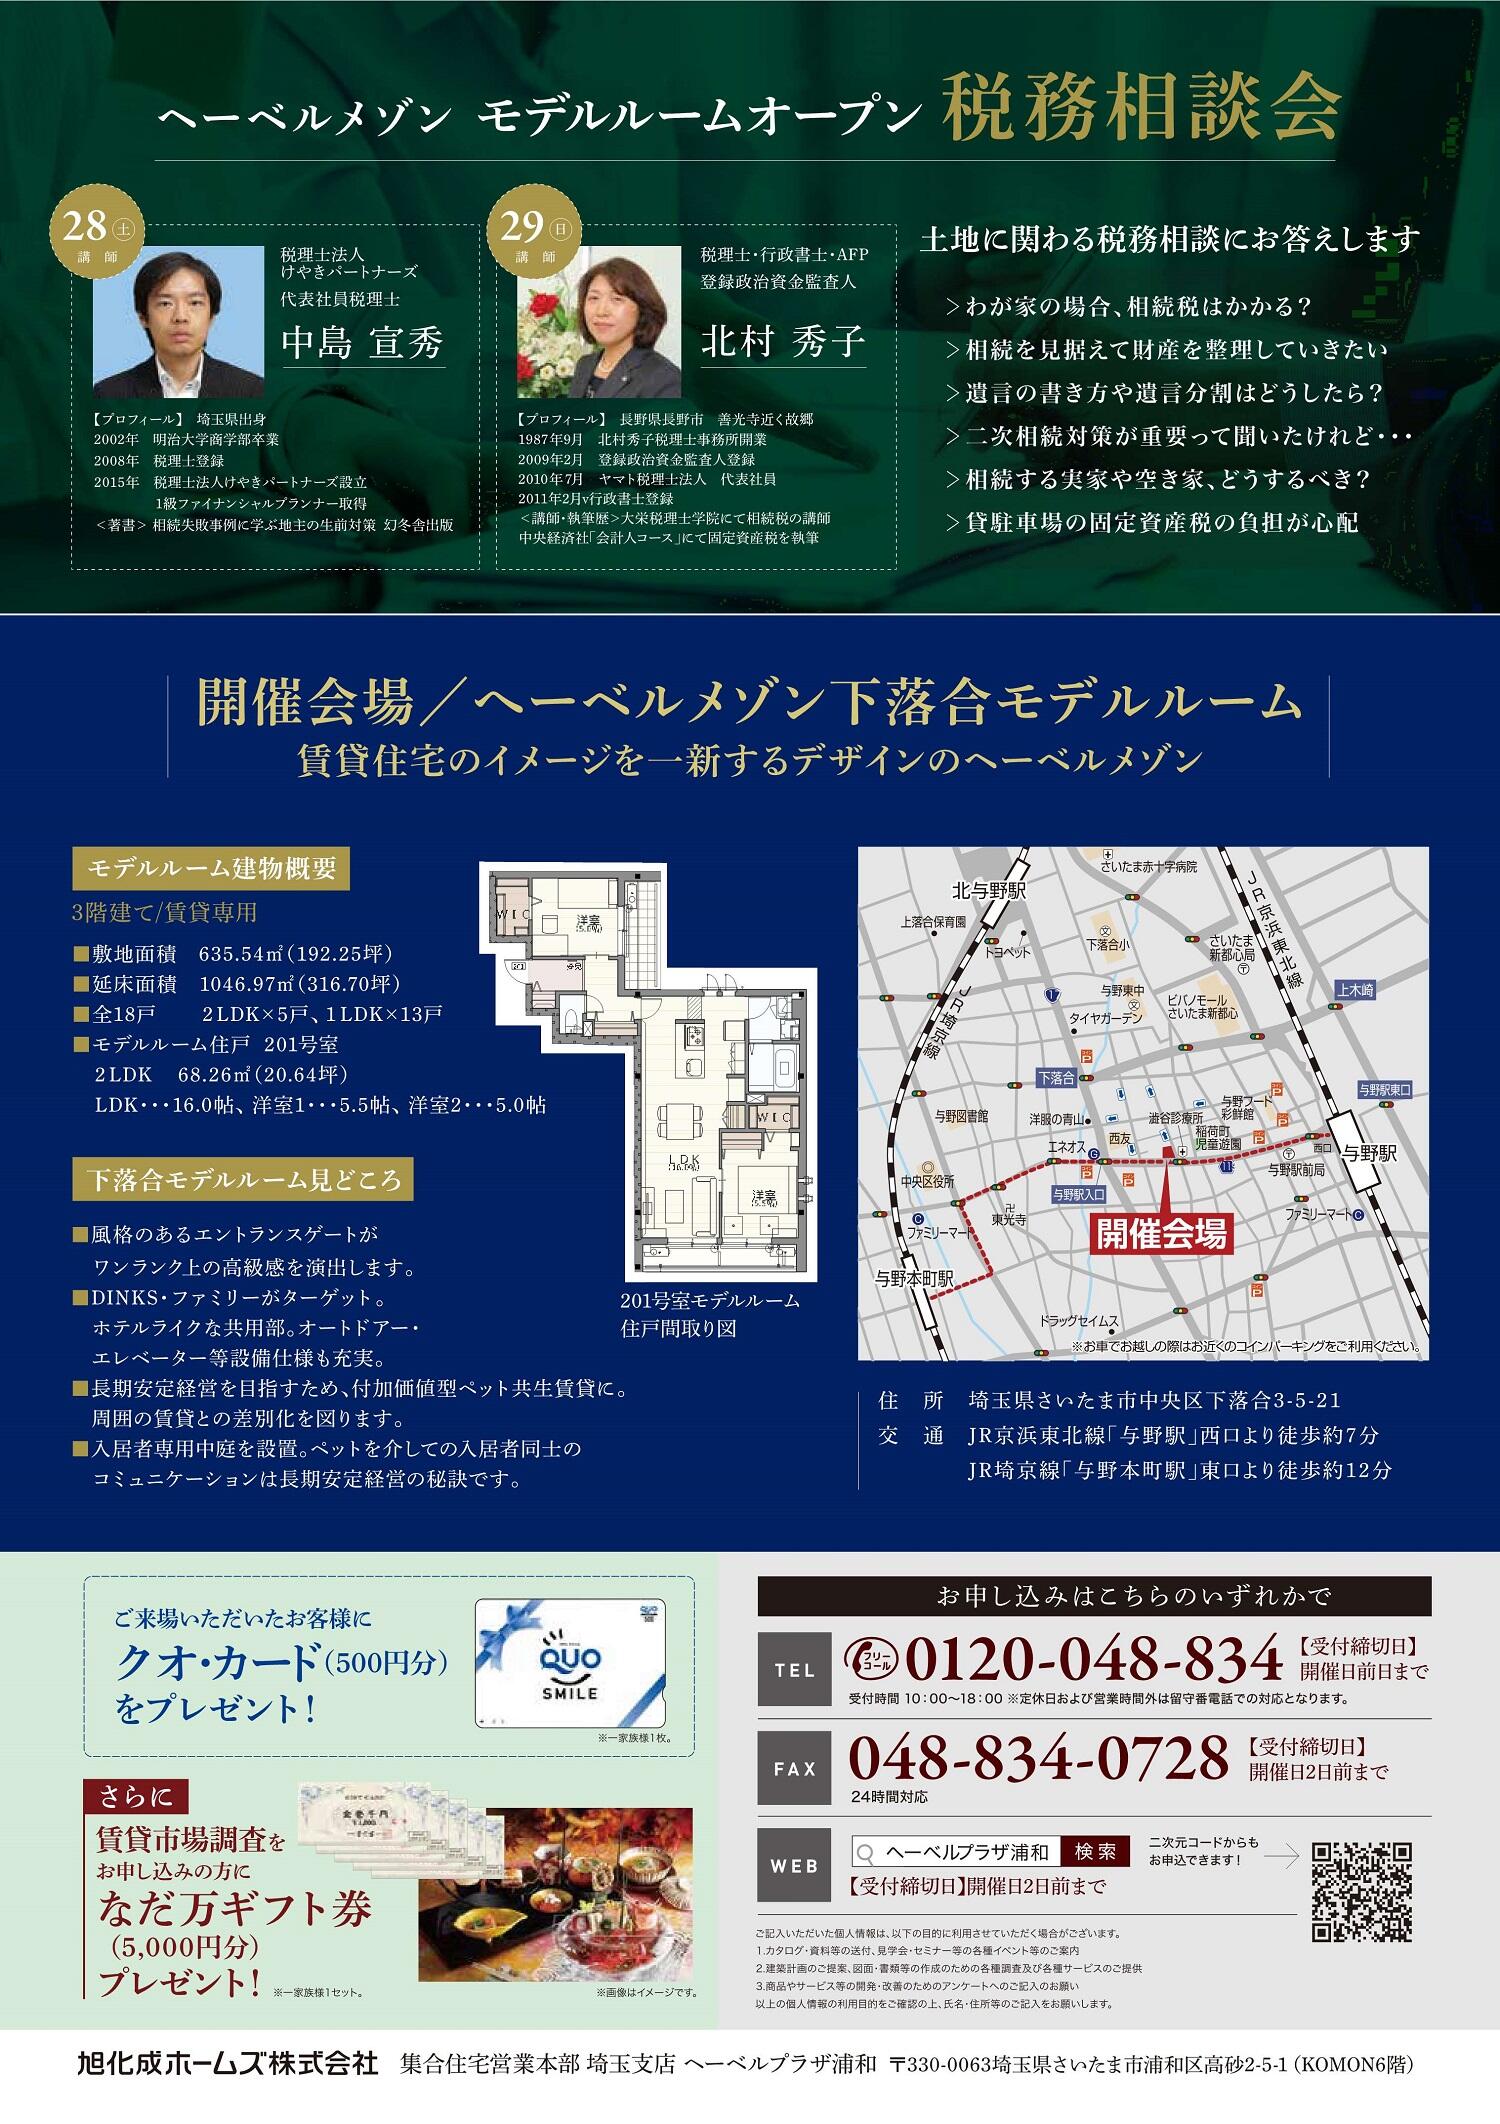 https://www.asahi-kasei.co.jp/maison/hebelplaza/blog/18/urawa/item/2020/201109-4.jpg